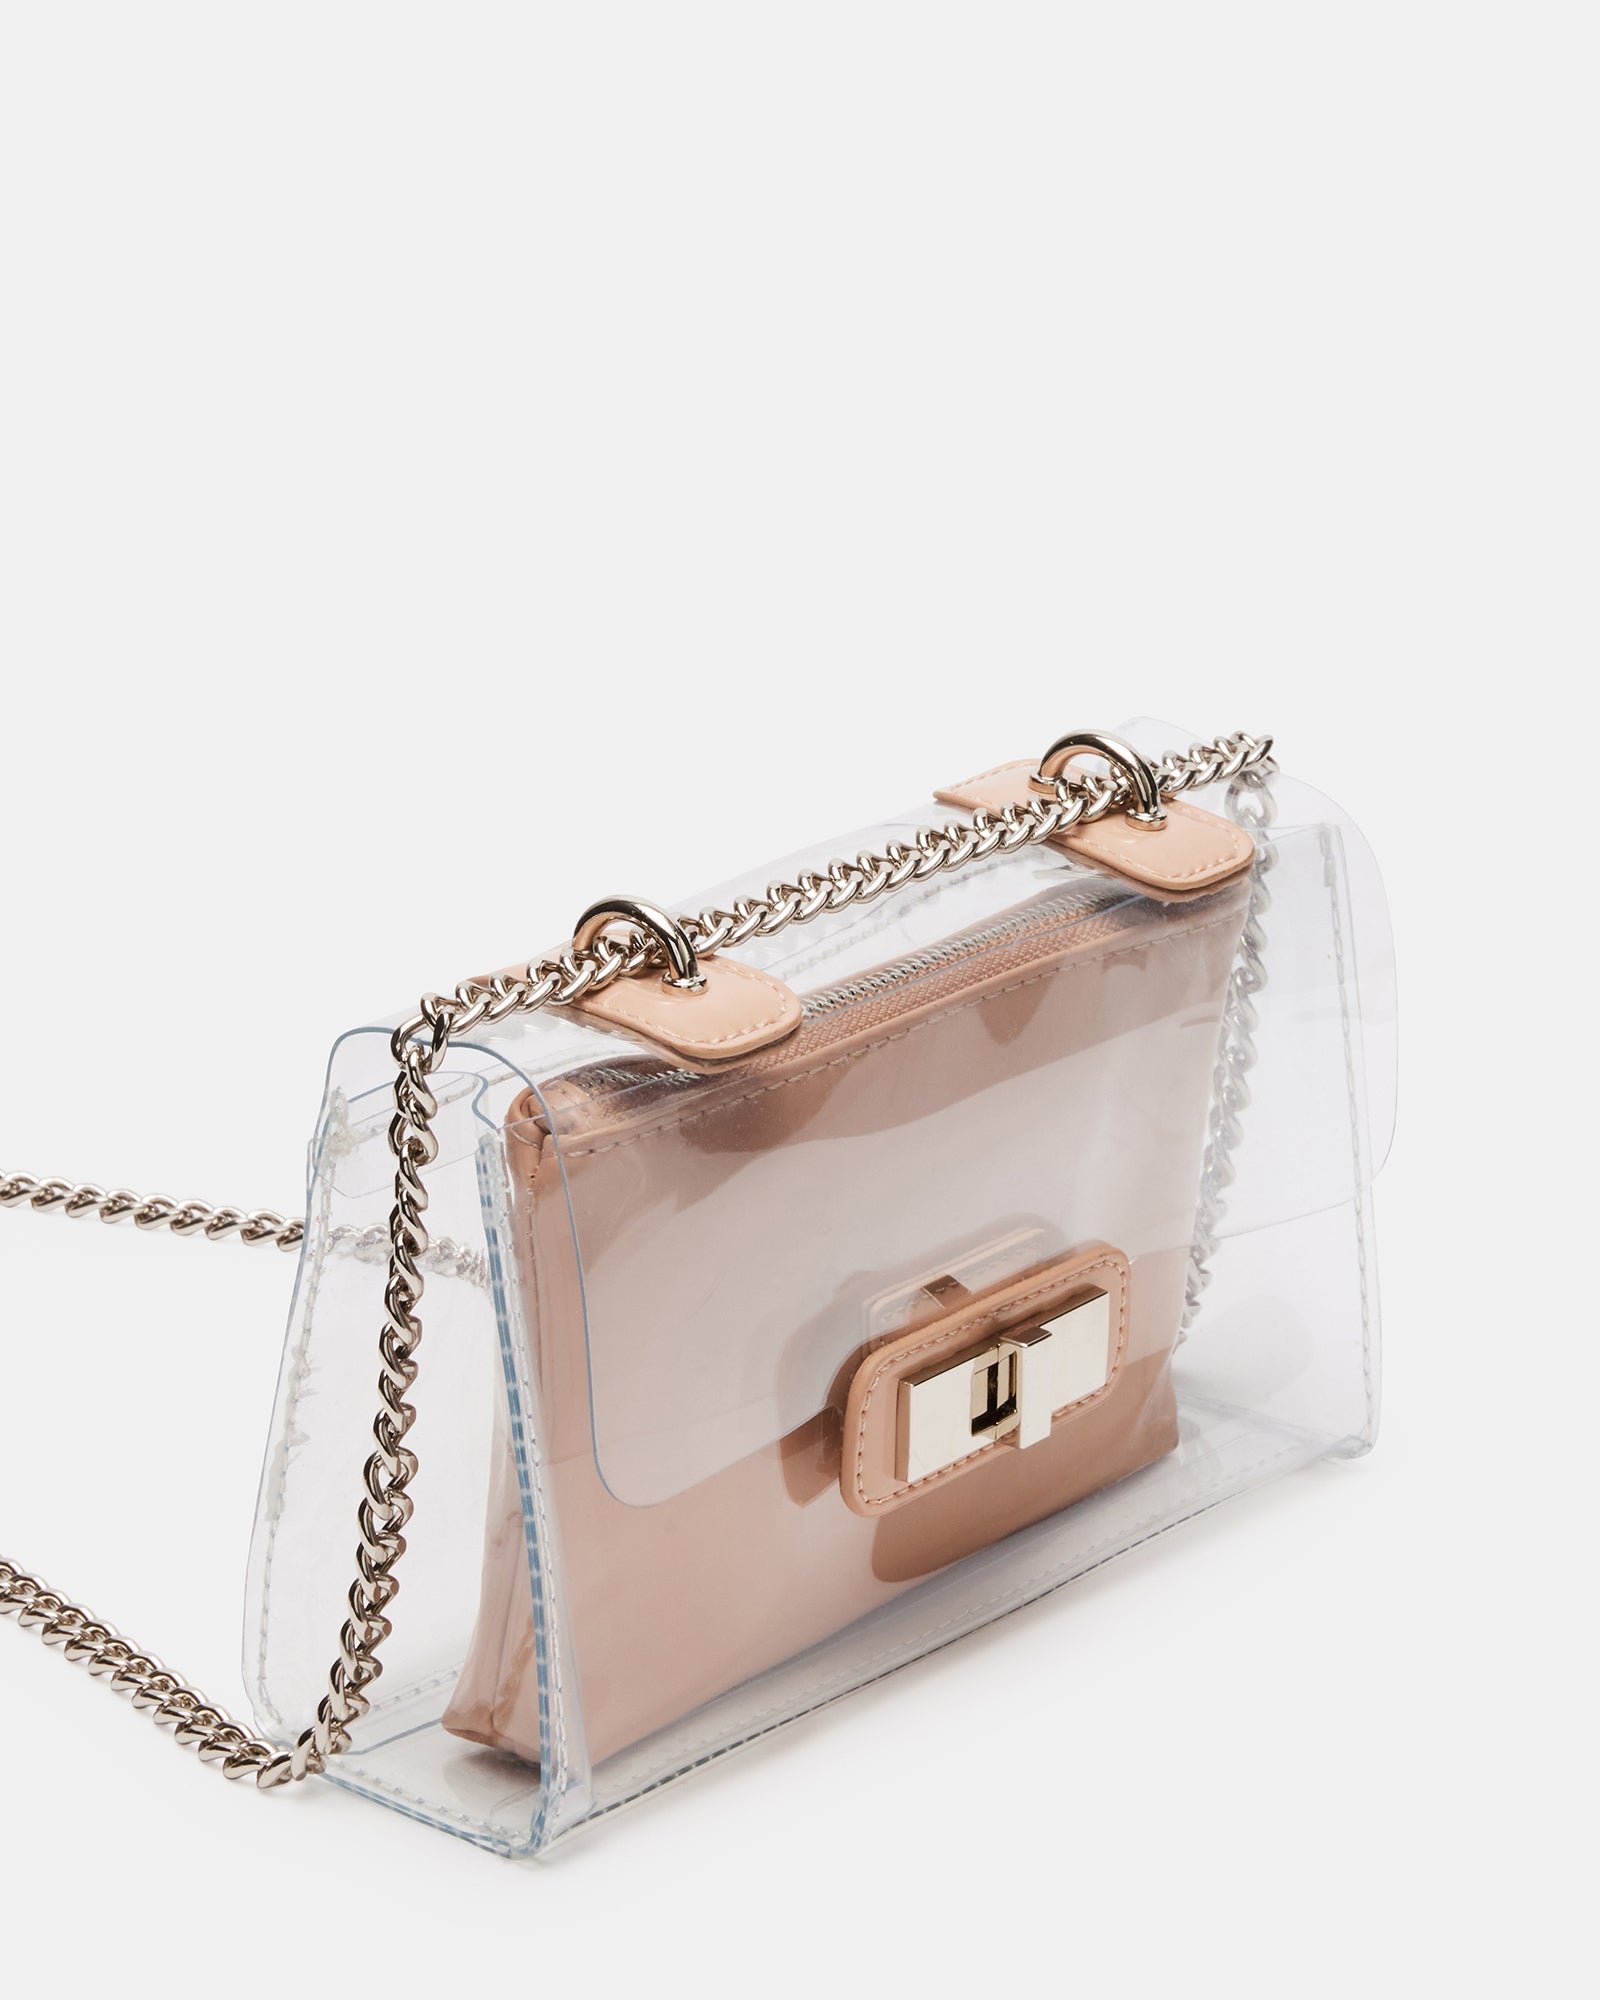 SCENE Bag Clear Flap Bag | Designer Clear Crossbody Bag for Women ...